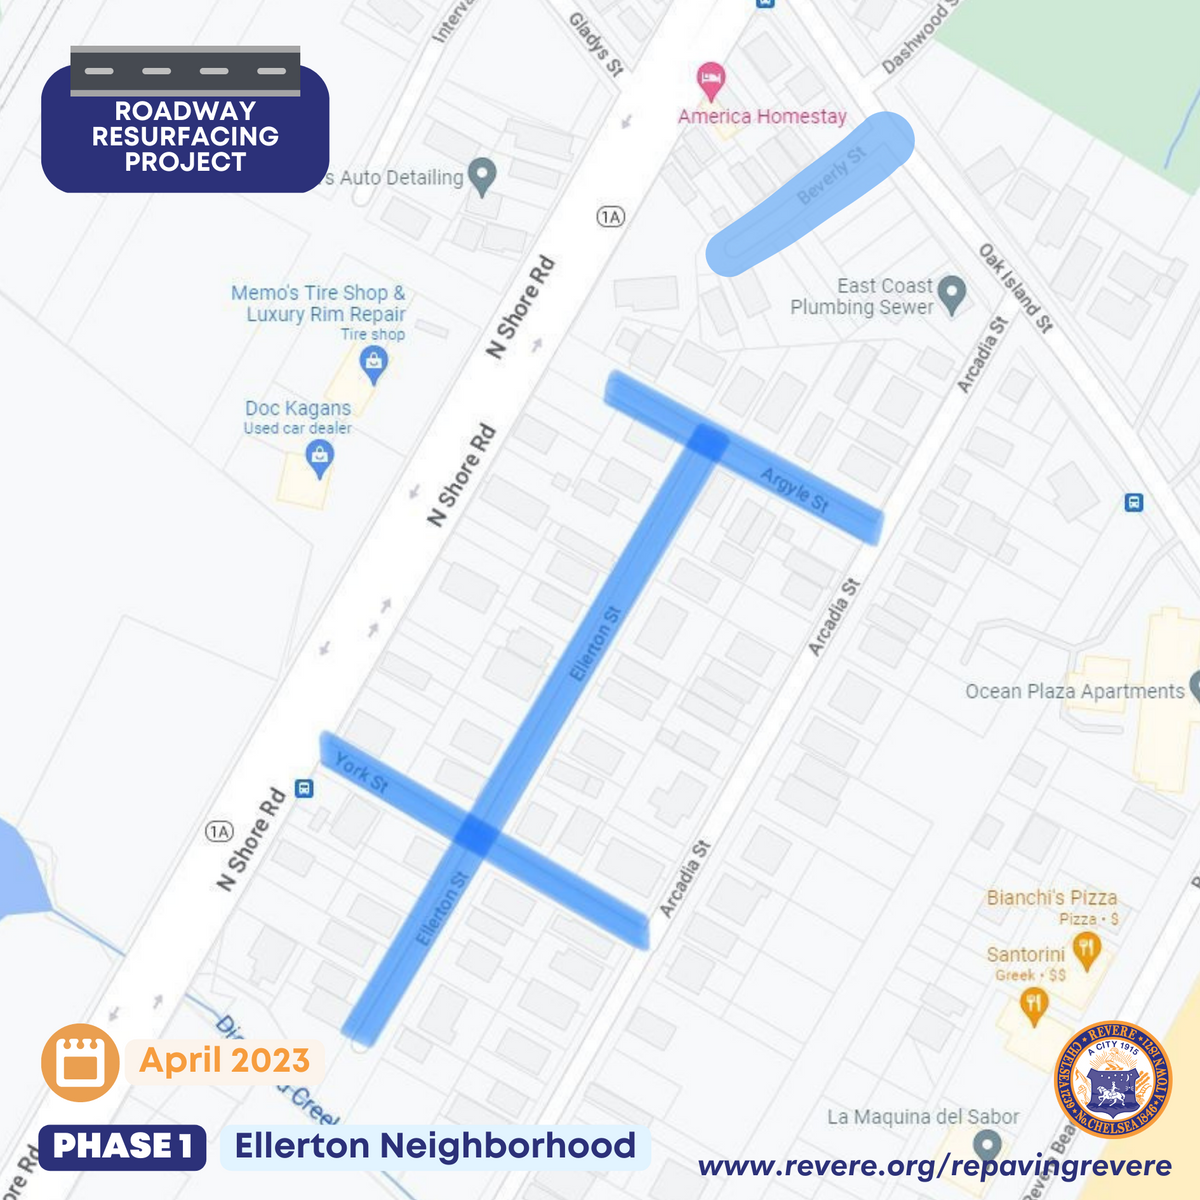 Ellerton Neighborhood - Roadway Resurfacing